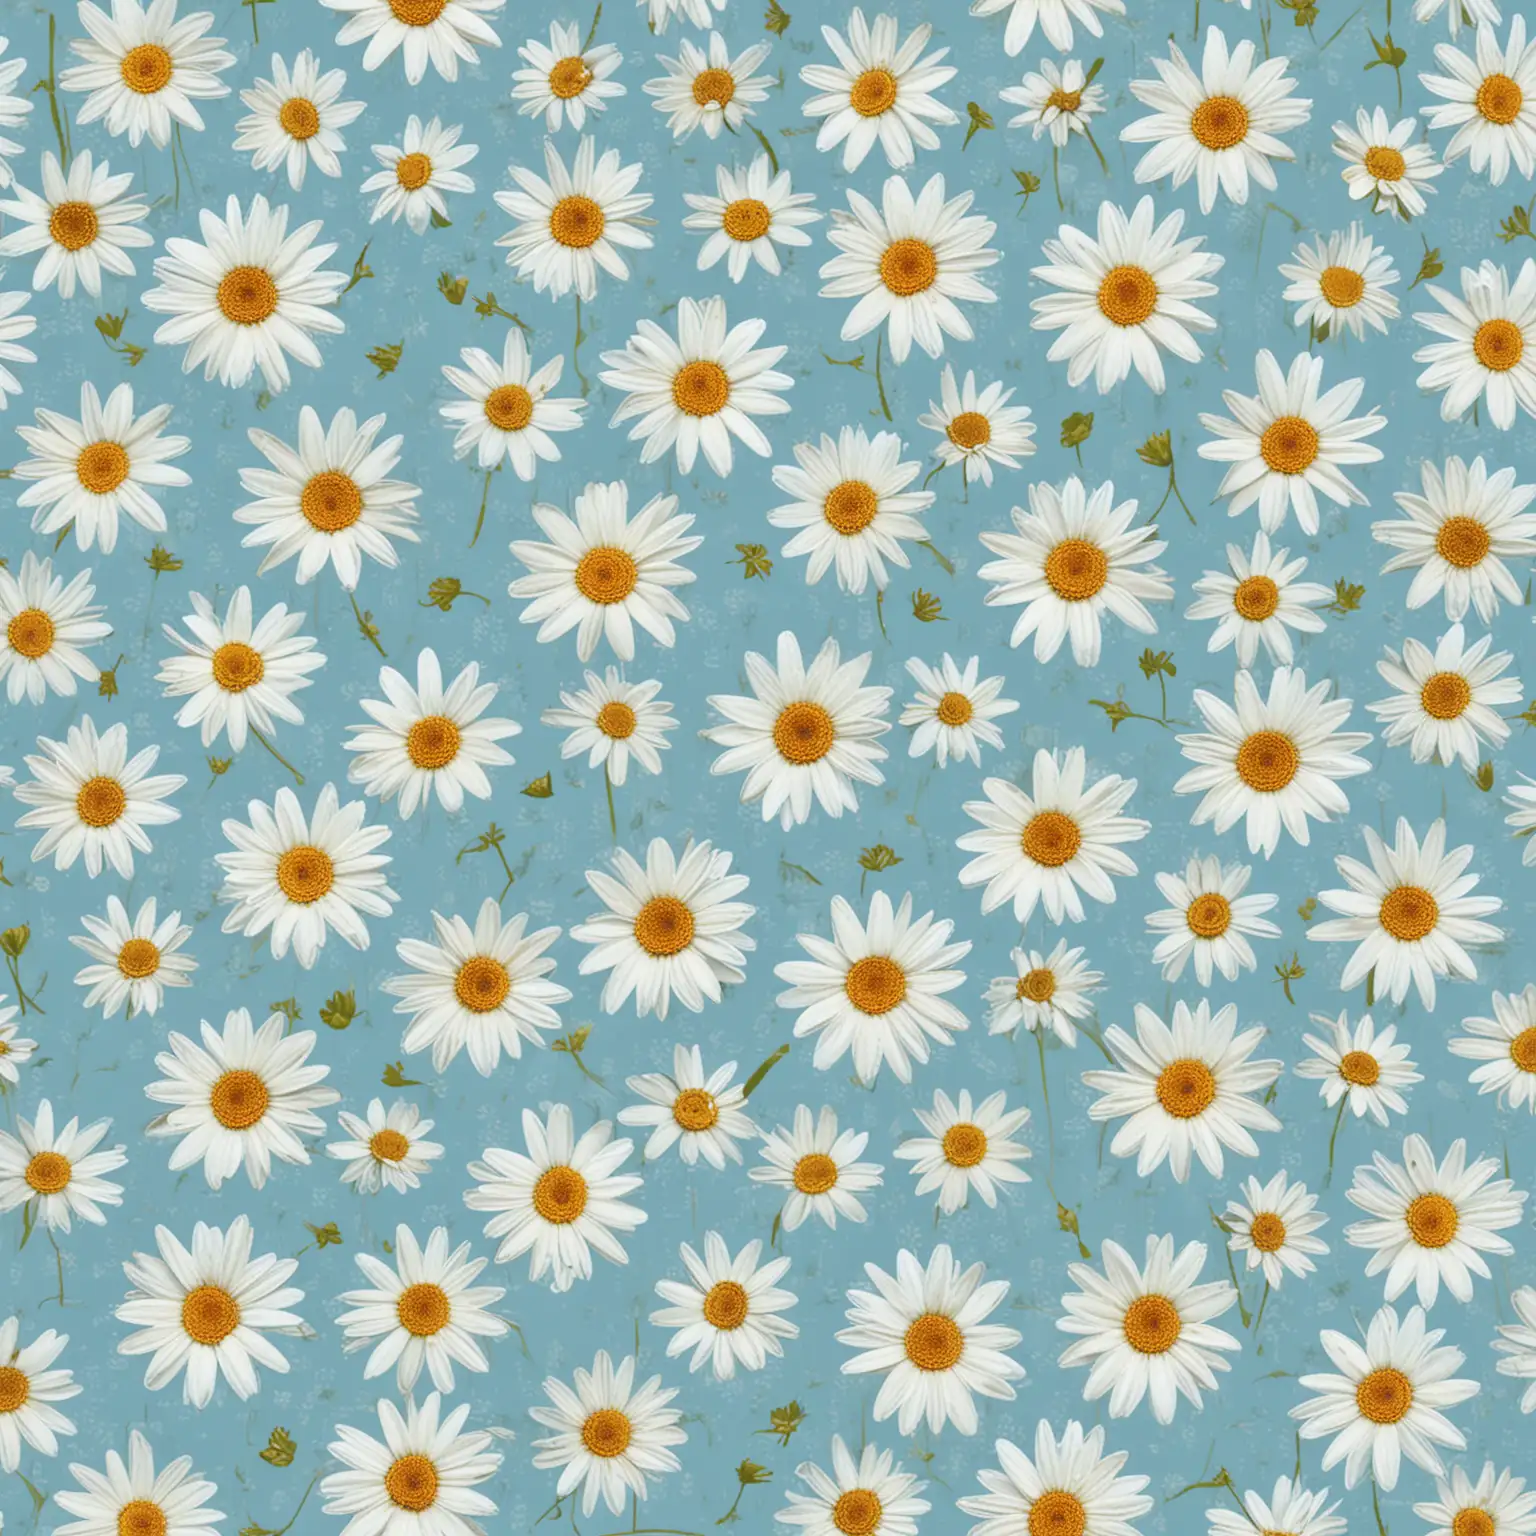 Daisy Flowers Blooming Against a Serene Light Blue Sky